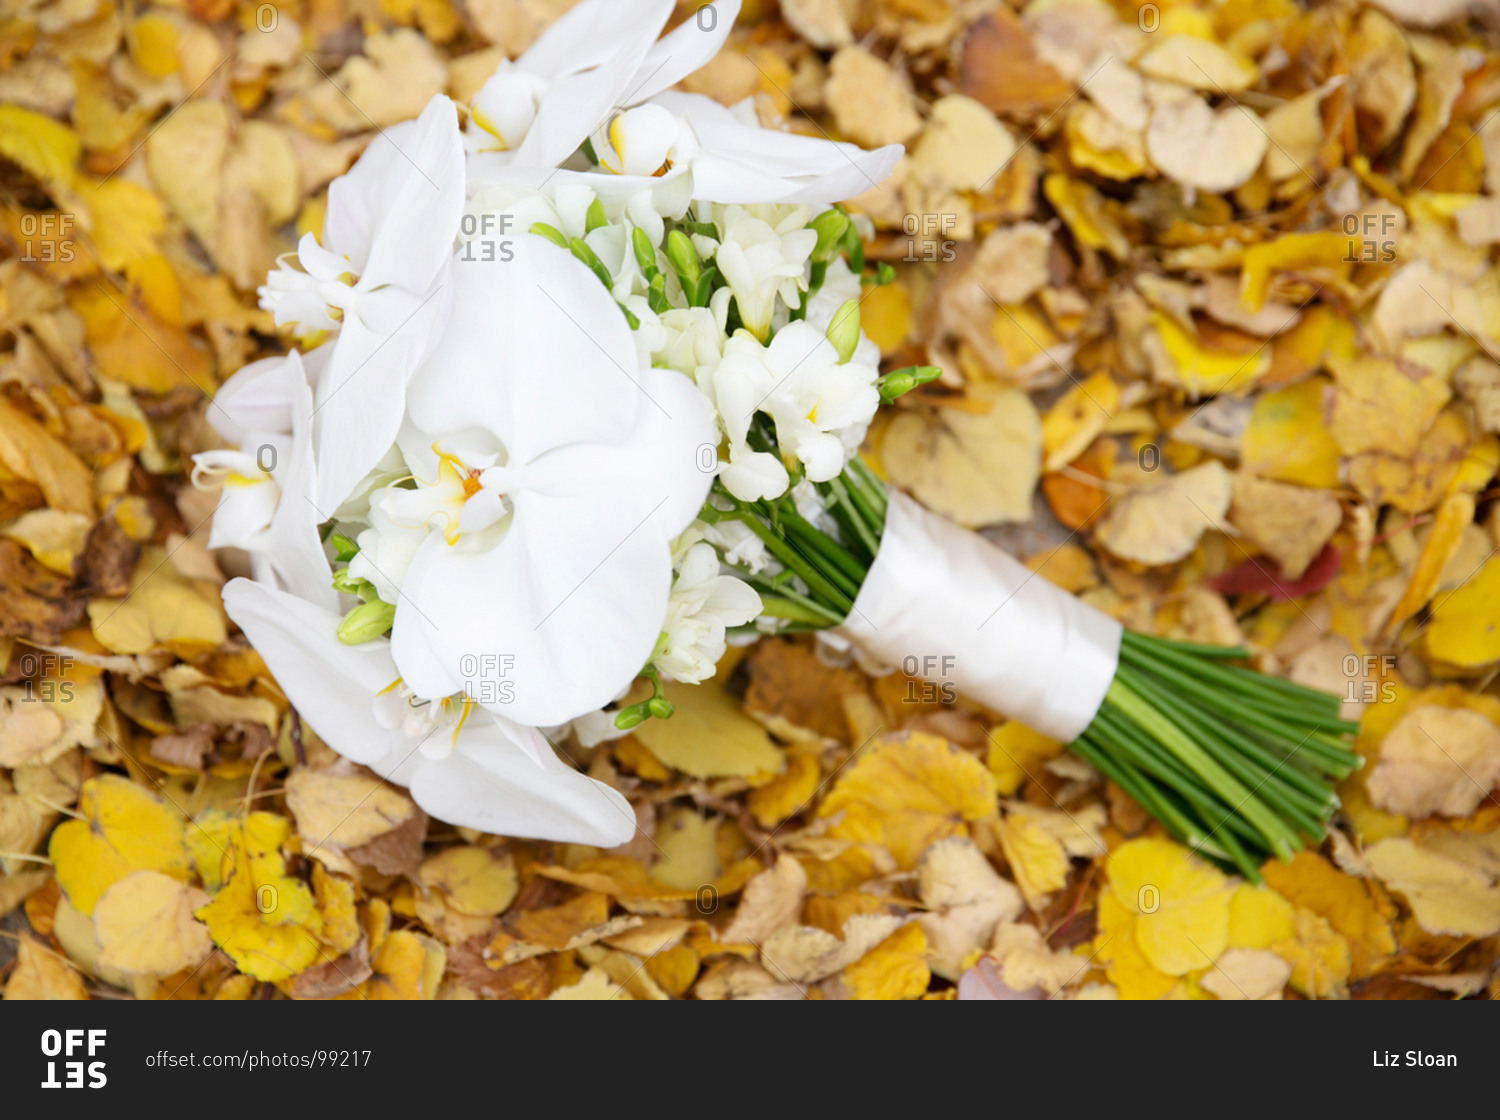 Close up of bridal bouquet